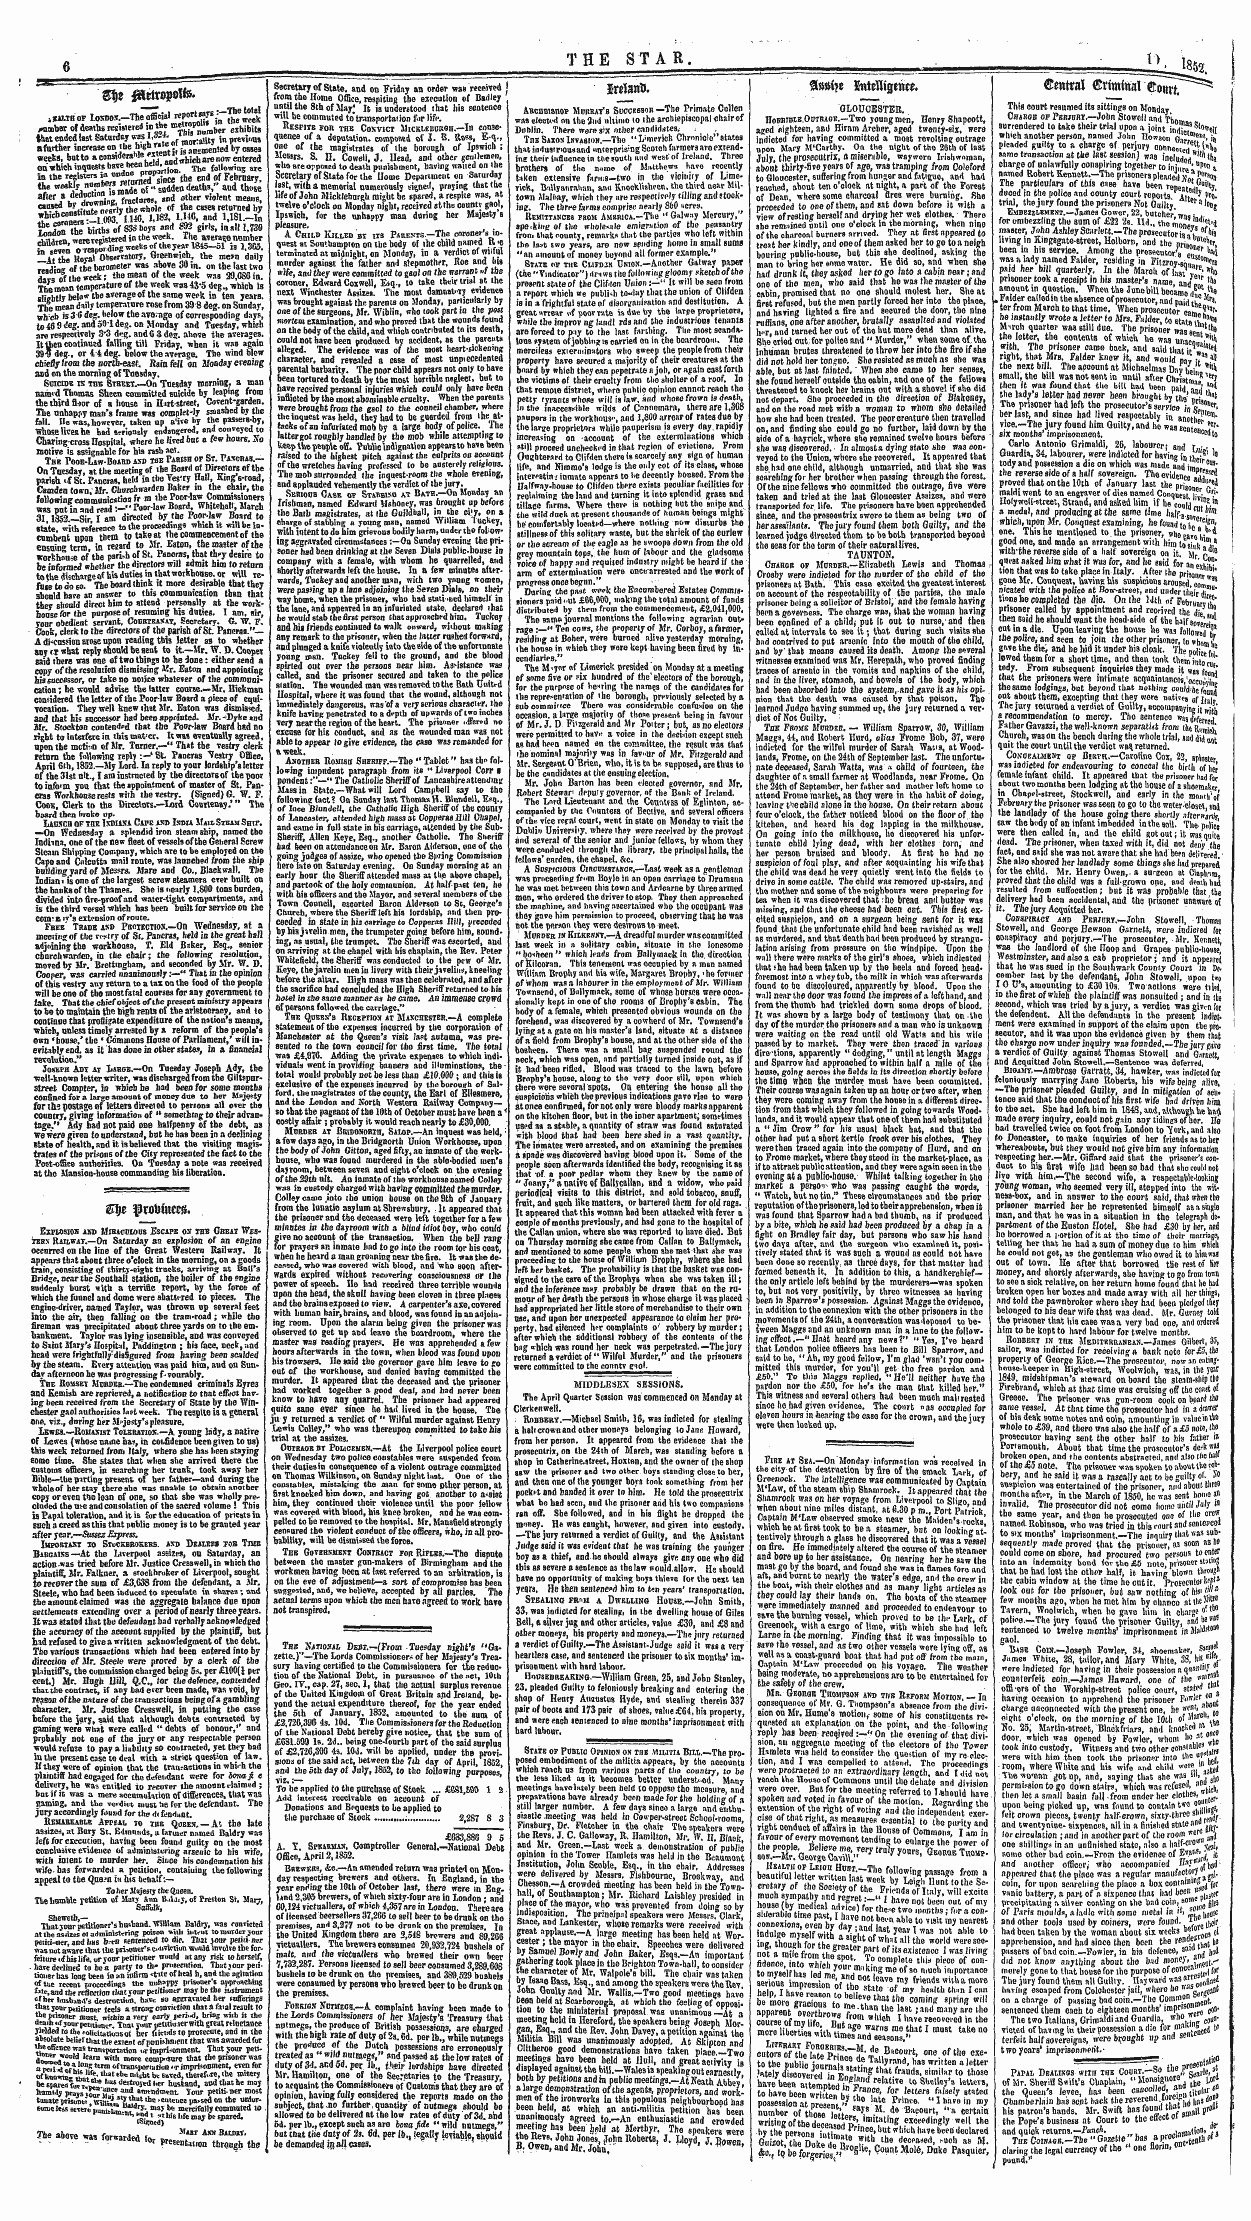 Northern Star (1837-1852): jS F Y, 2nd edition - Central Criminal Eourt